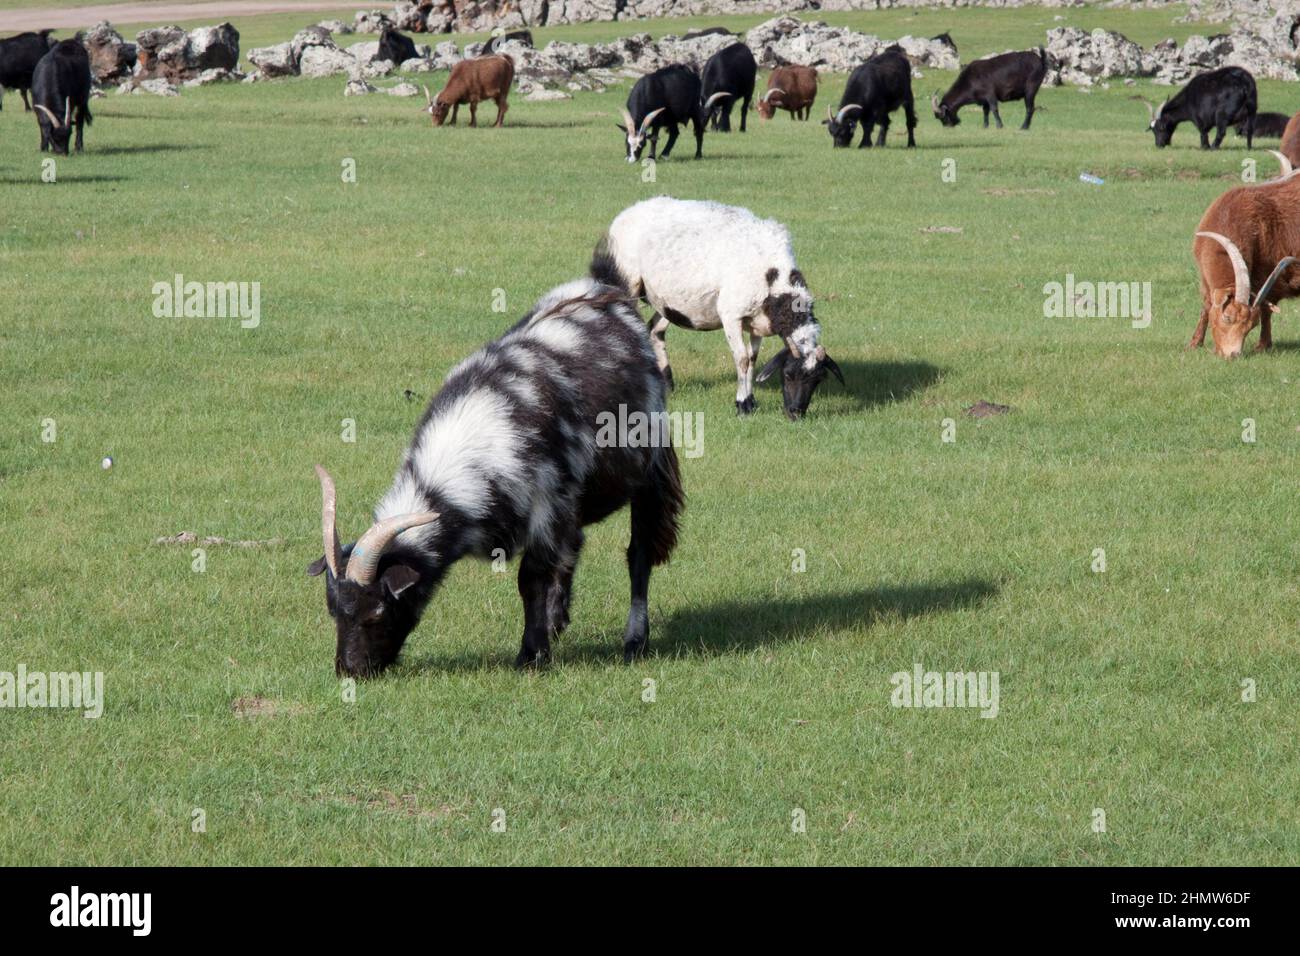 Mandria di capre che mangiano erba in una zona rurale in Mongolia. Nessuna gente. La capra più vicina ha corna lunghe e lana lunga nera e bianca. Foto Stock